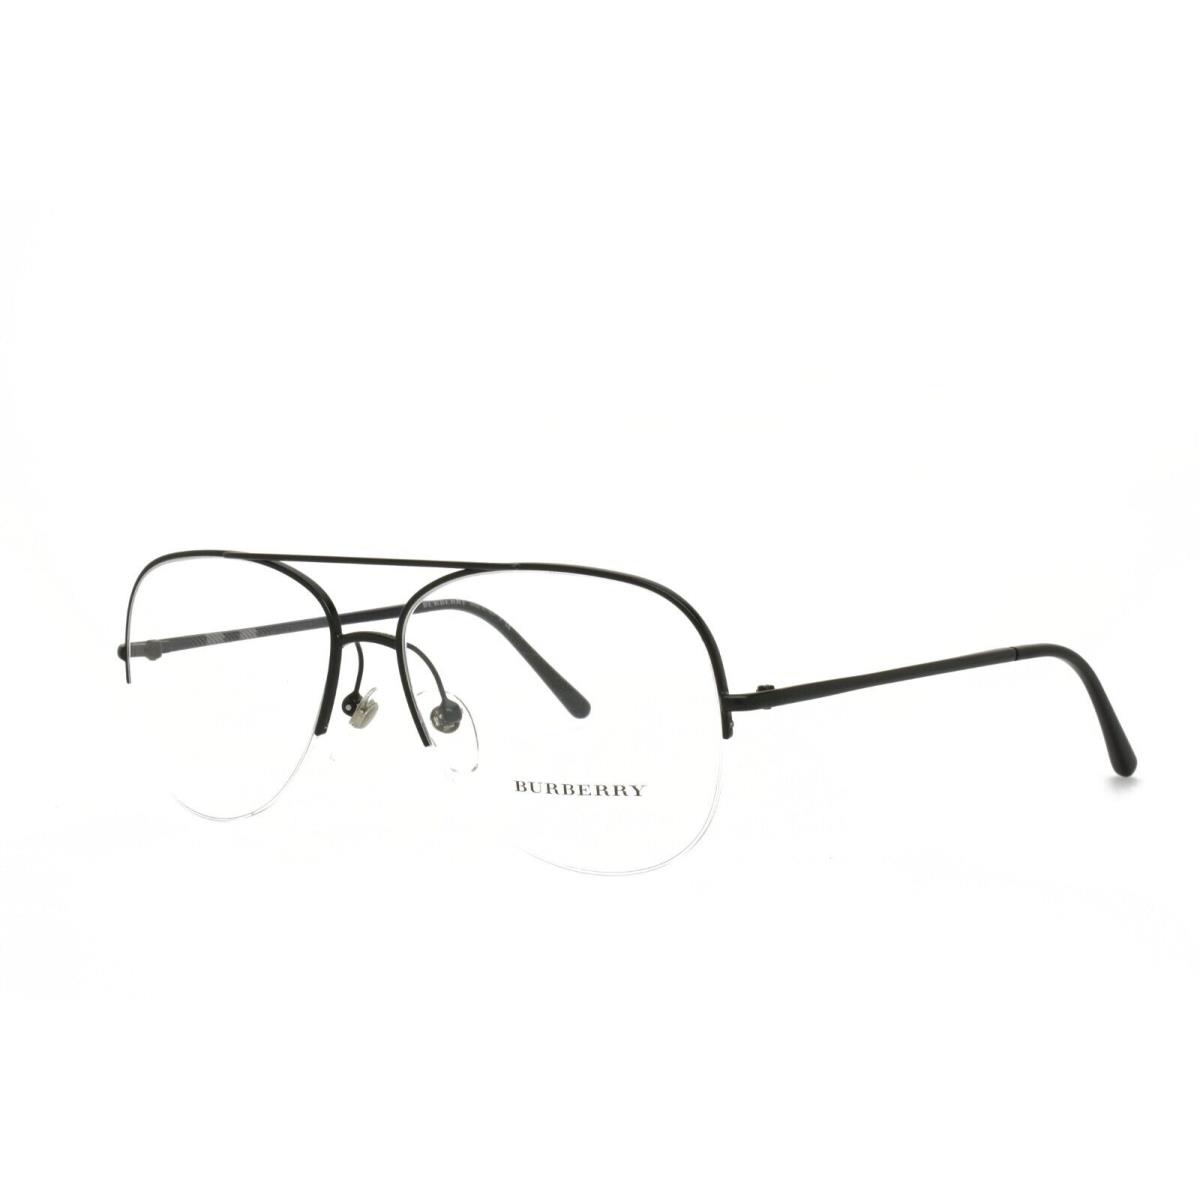 Burberry 1226 1007 55-15-135 Black Aviator Eyeglasses Frames